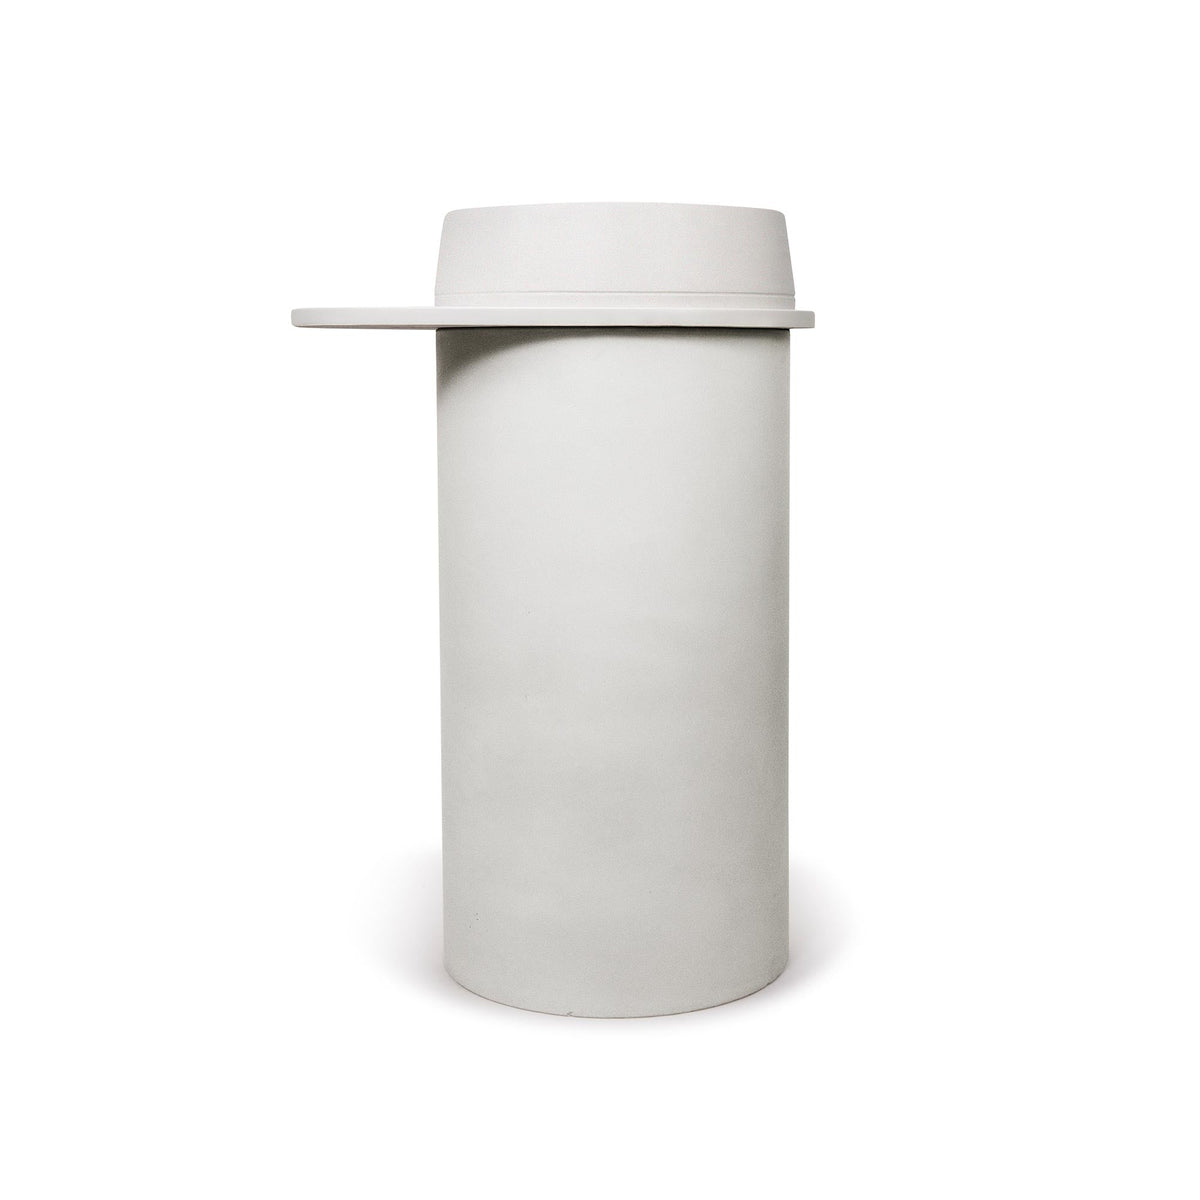 Cylinder with Tray - Funl Basin (Charcoal,Custard)